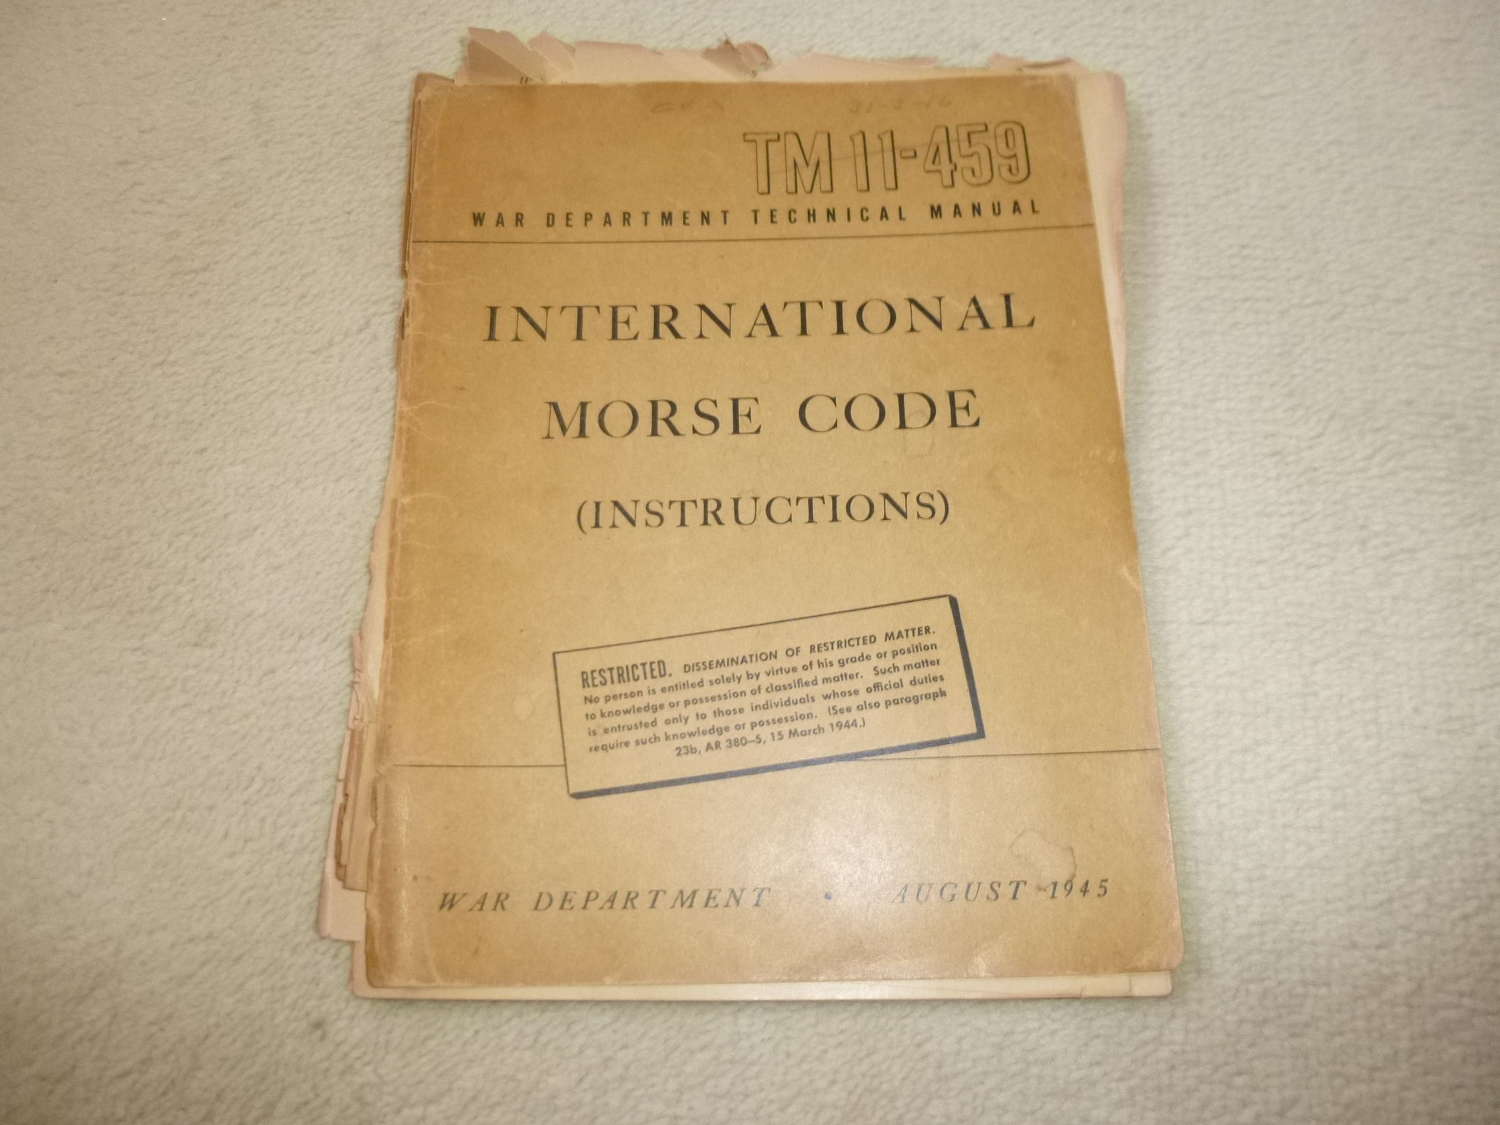 US Army TM11-459 Morse Code training manual